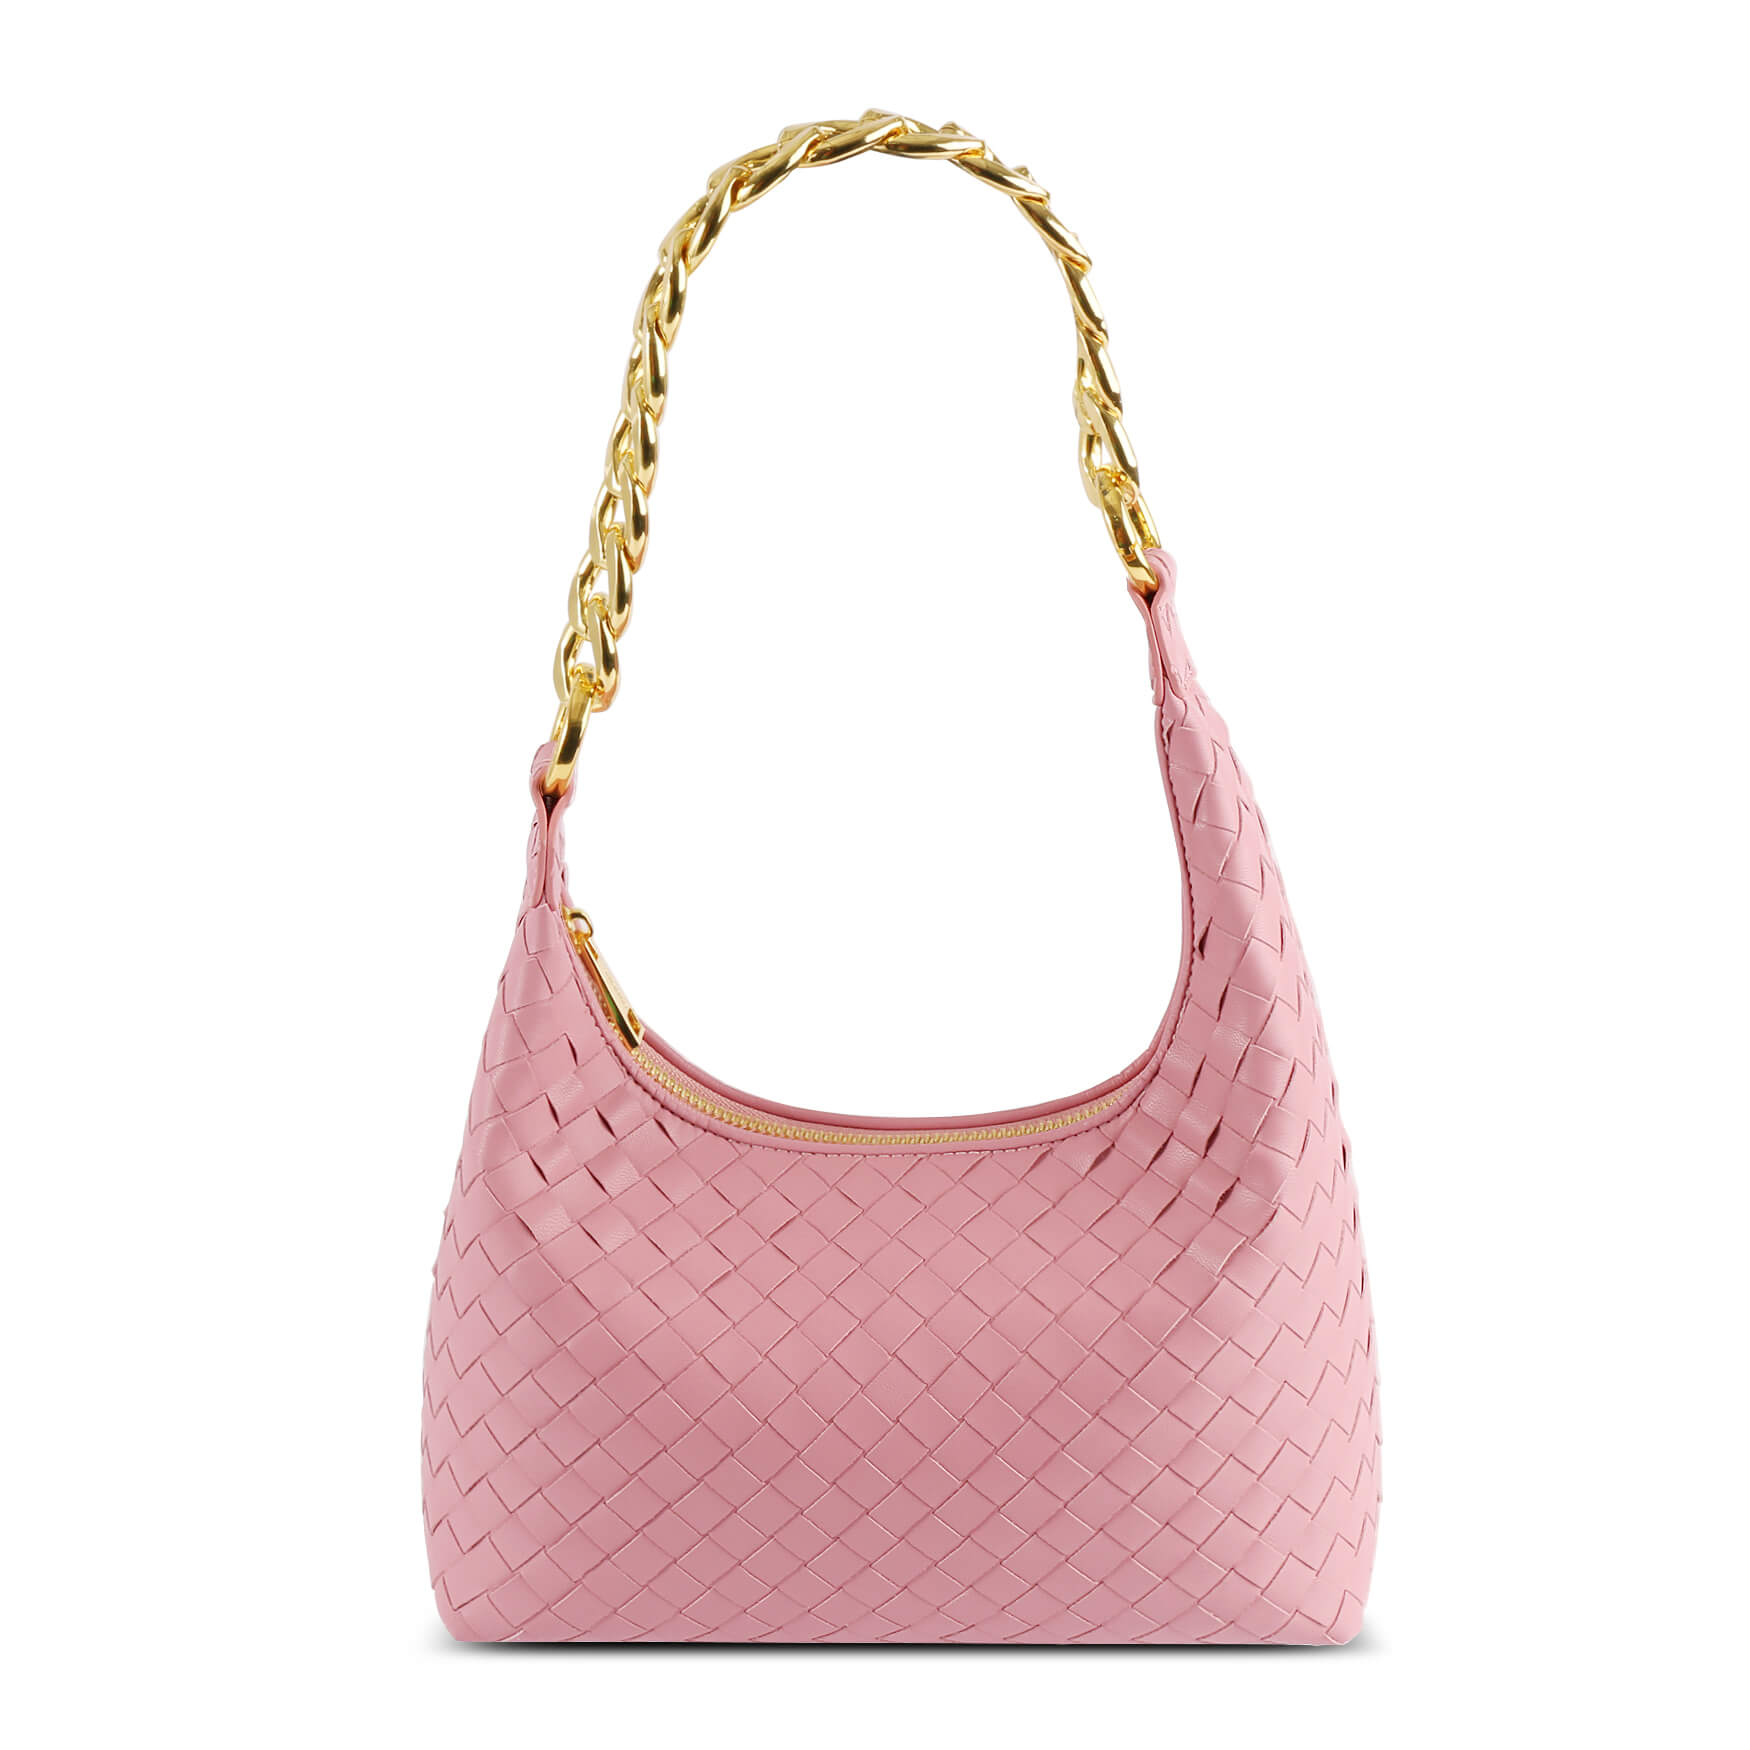 SINBONO Vienna Pink Satchel Bag Women Vegan Leather Handbag